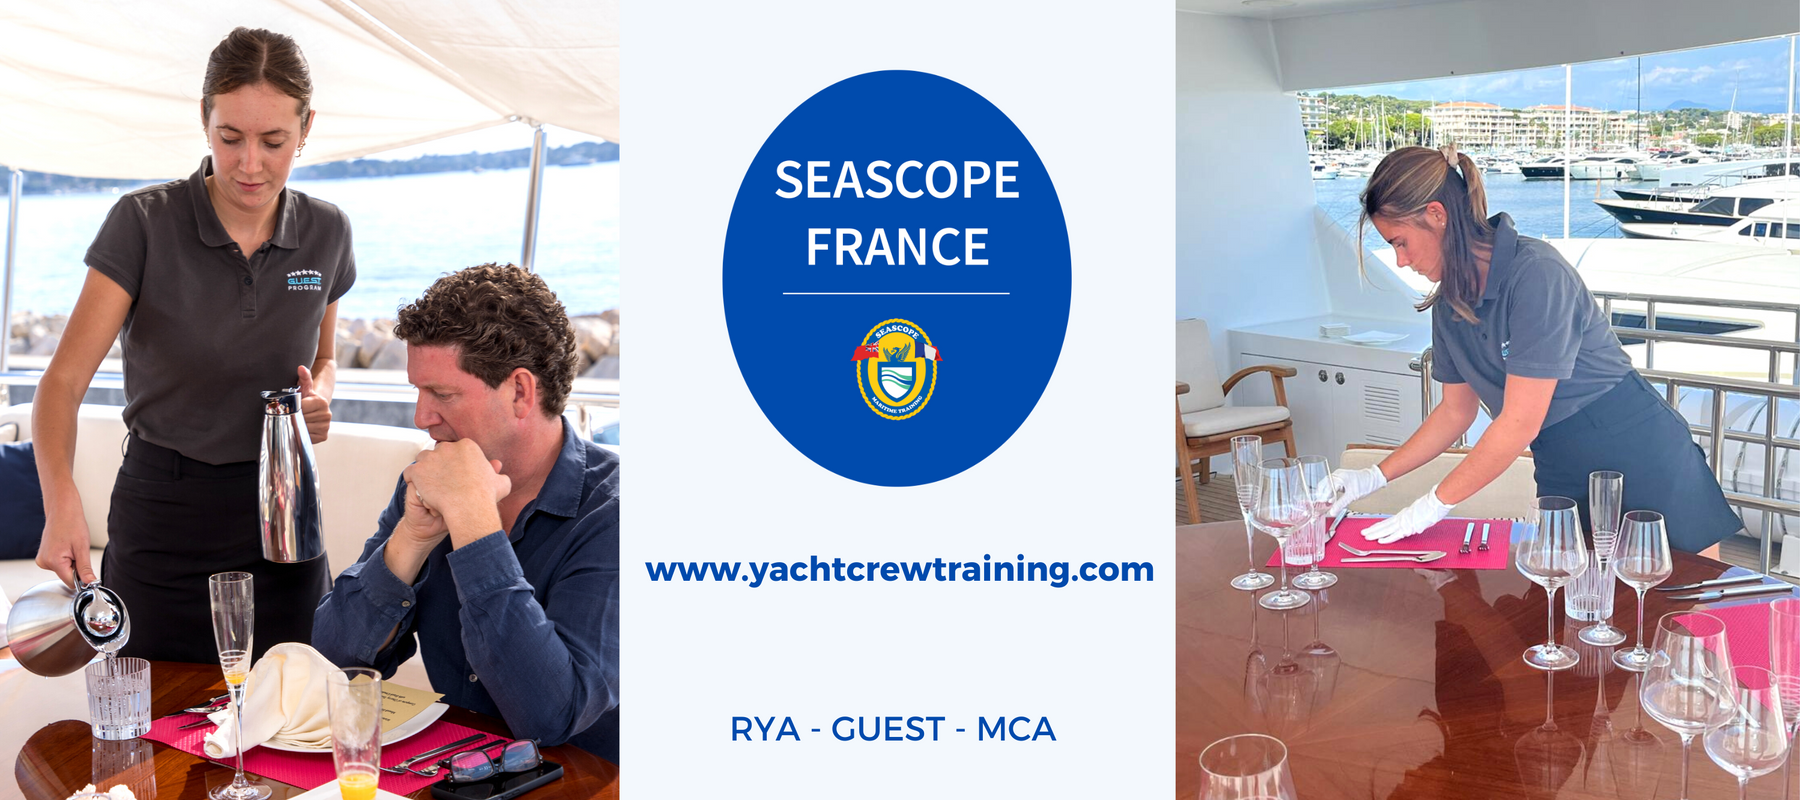 Seascope France Interior Training Featured